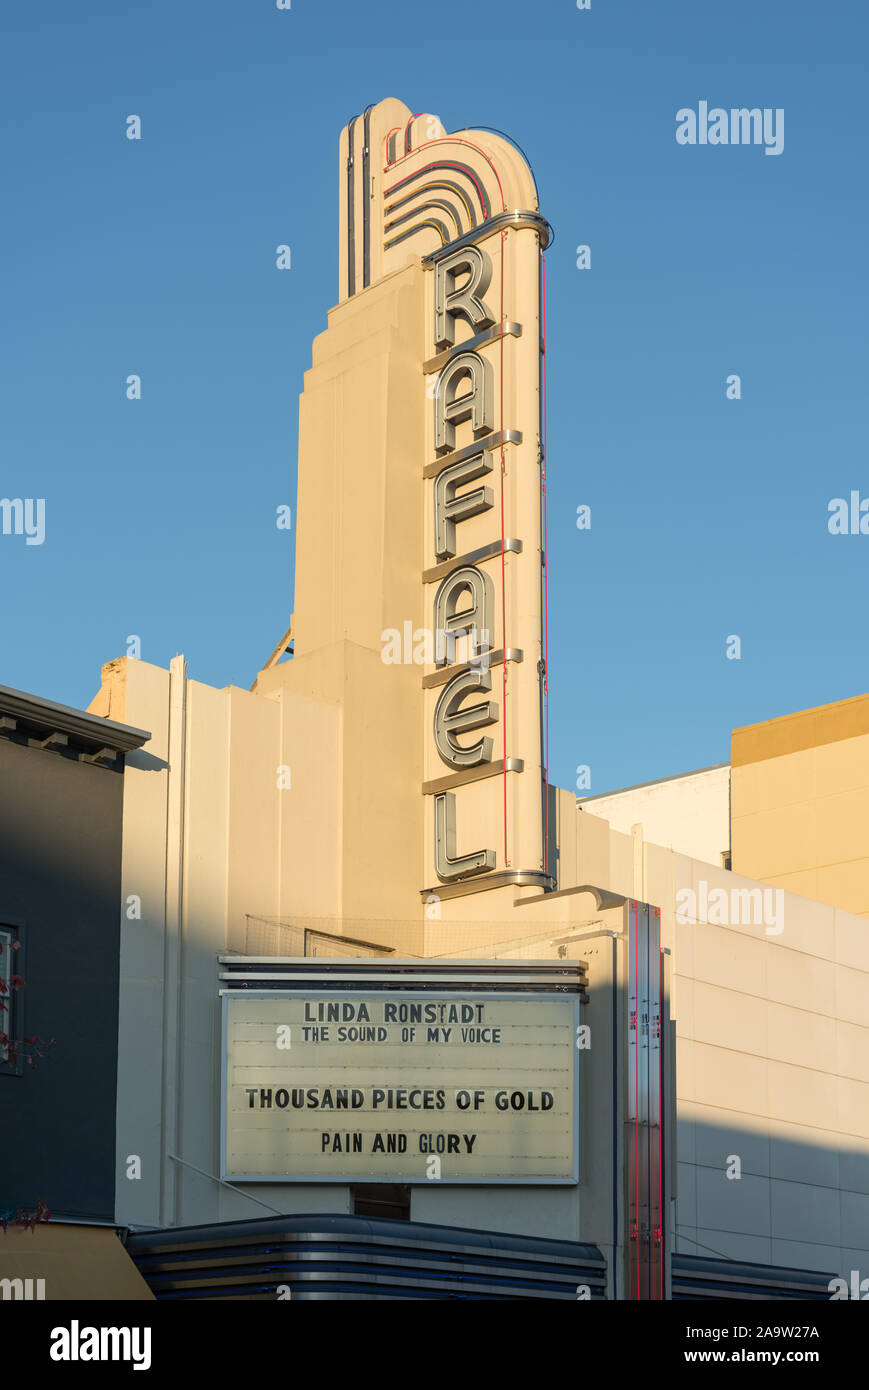 Smith Rafael Film Center theater marquee in San Rafael, California, U.S.A. Stock Photo